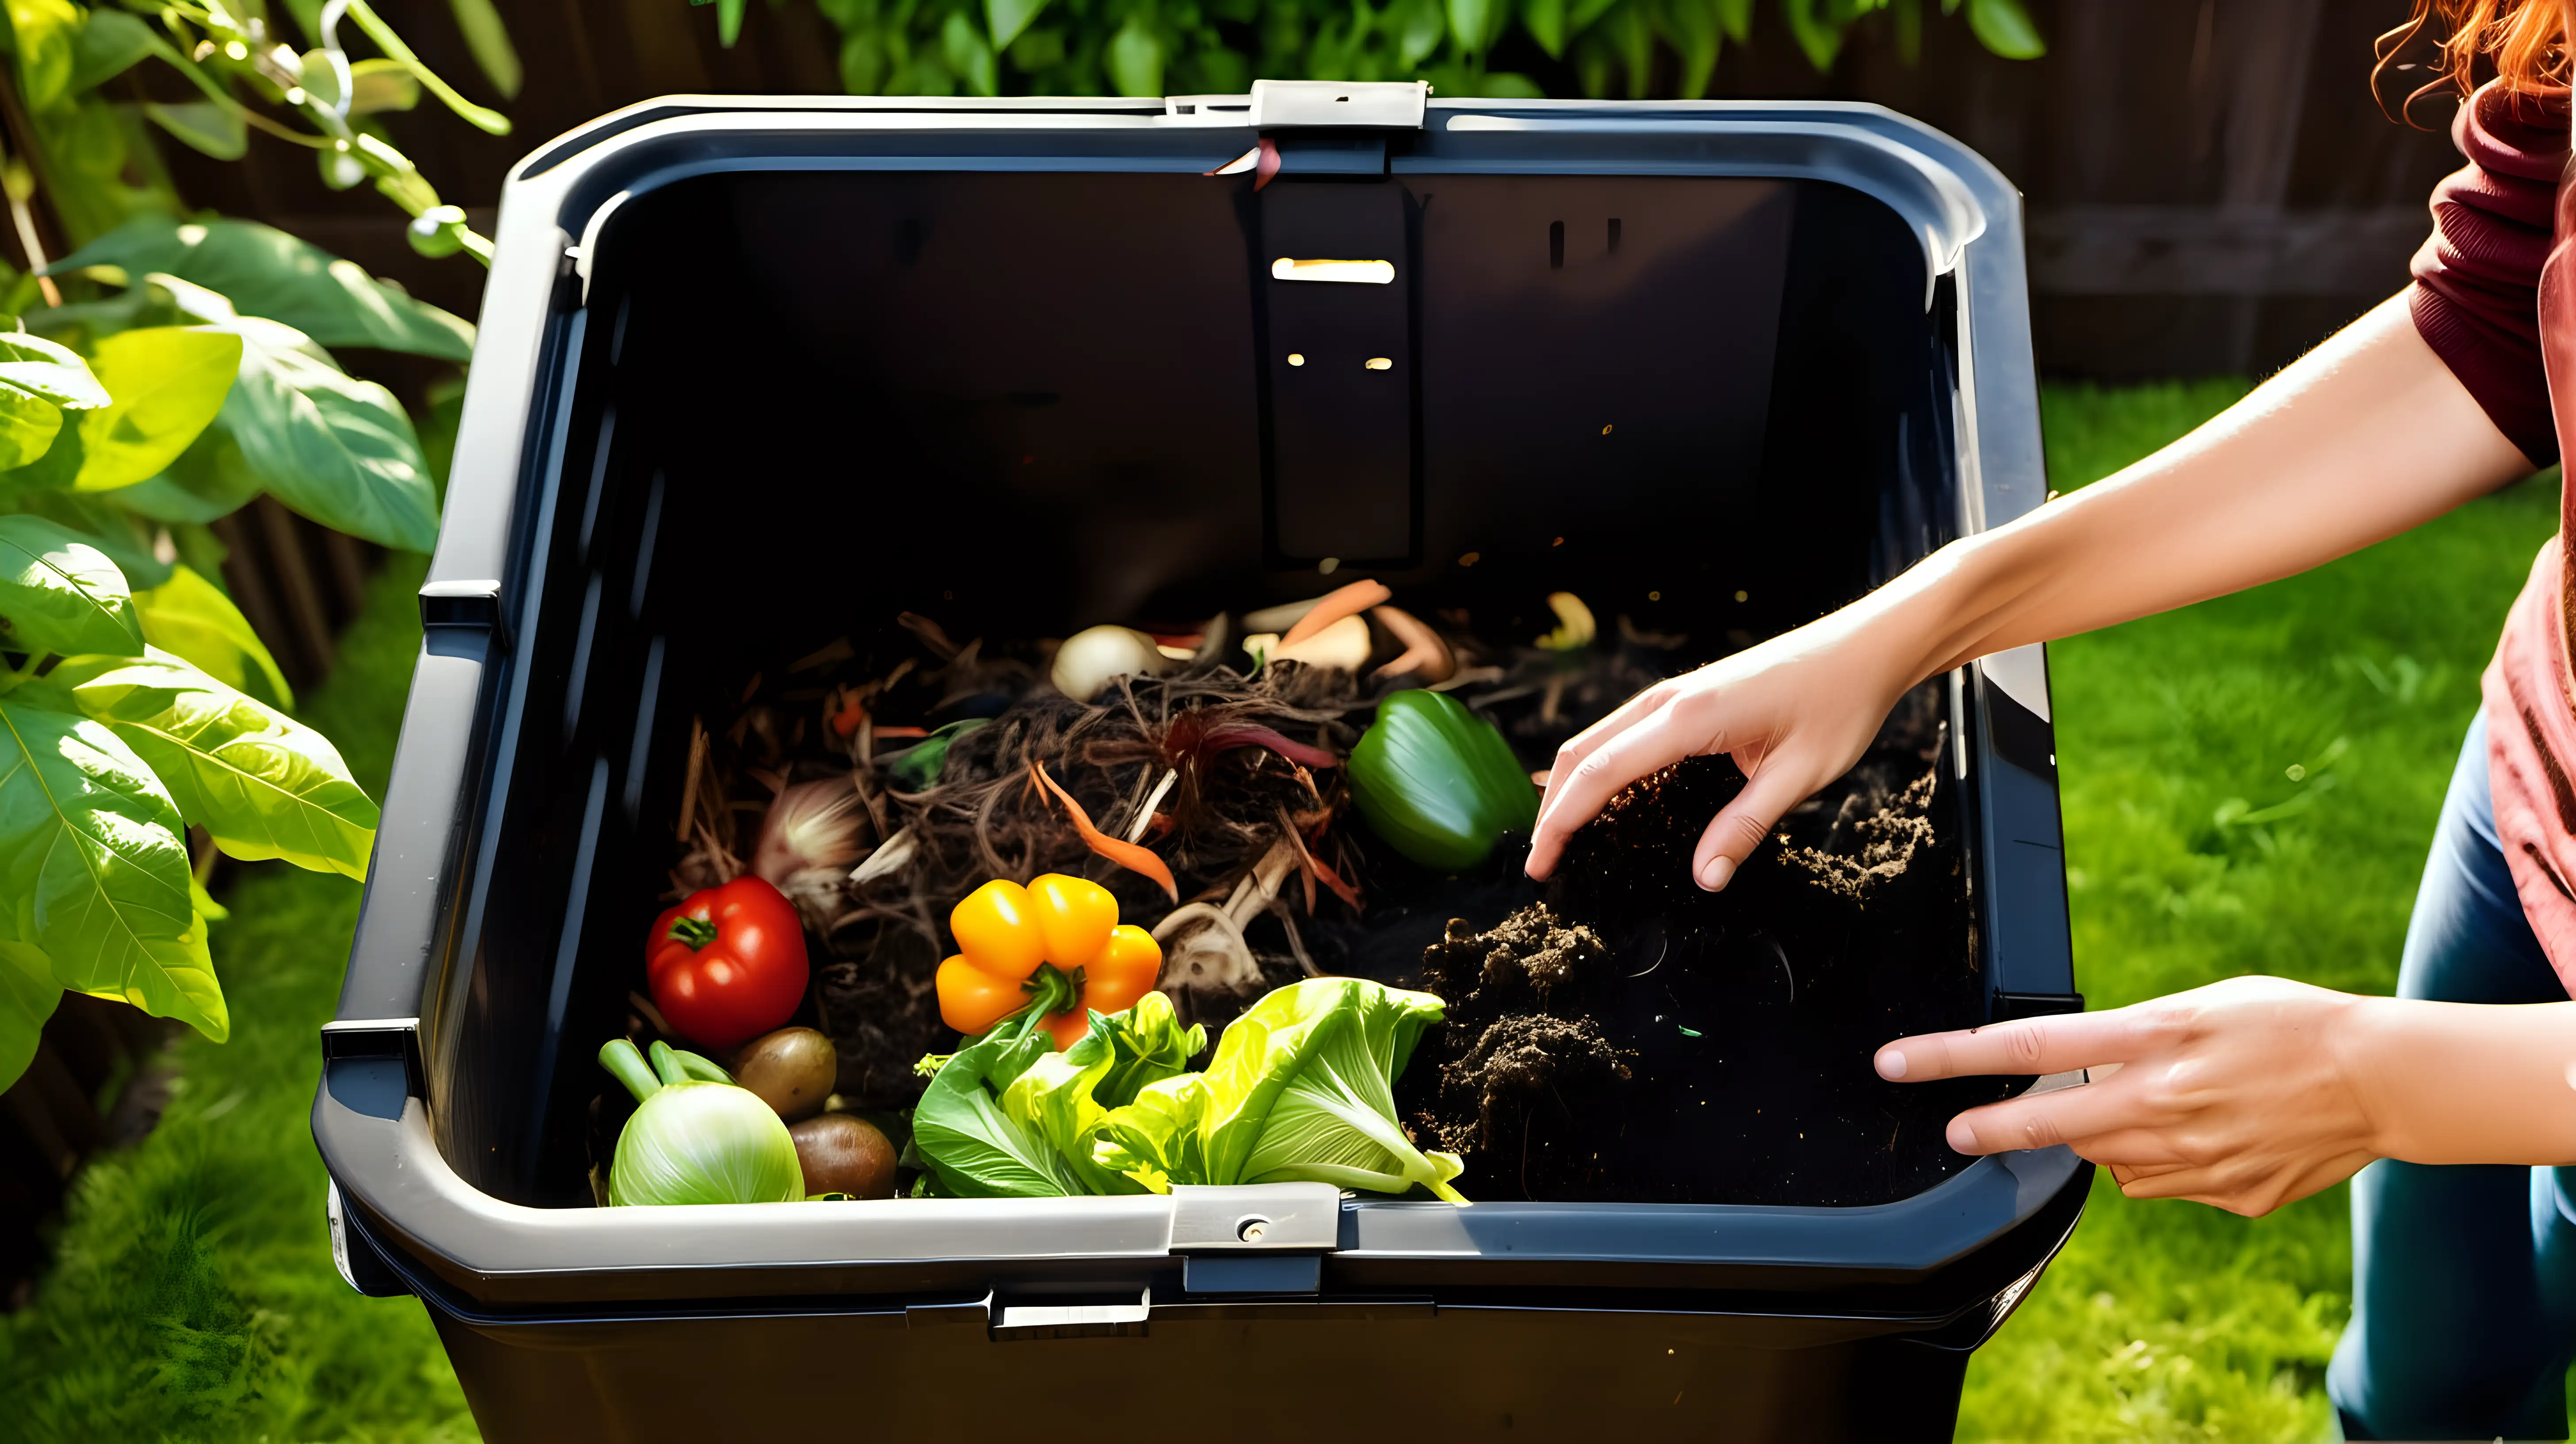 Person composting food waste in backyard compost bin garden